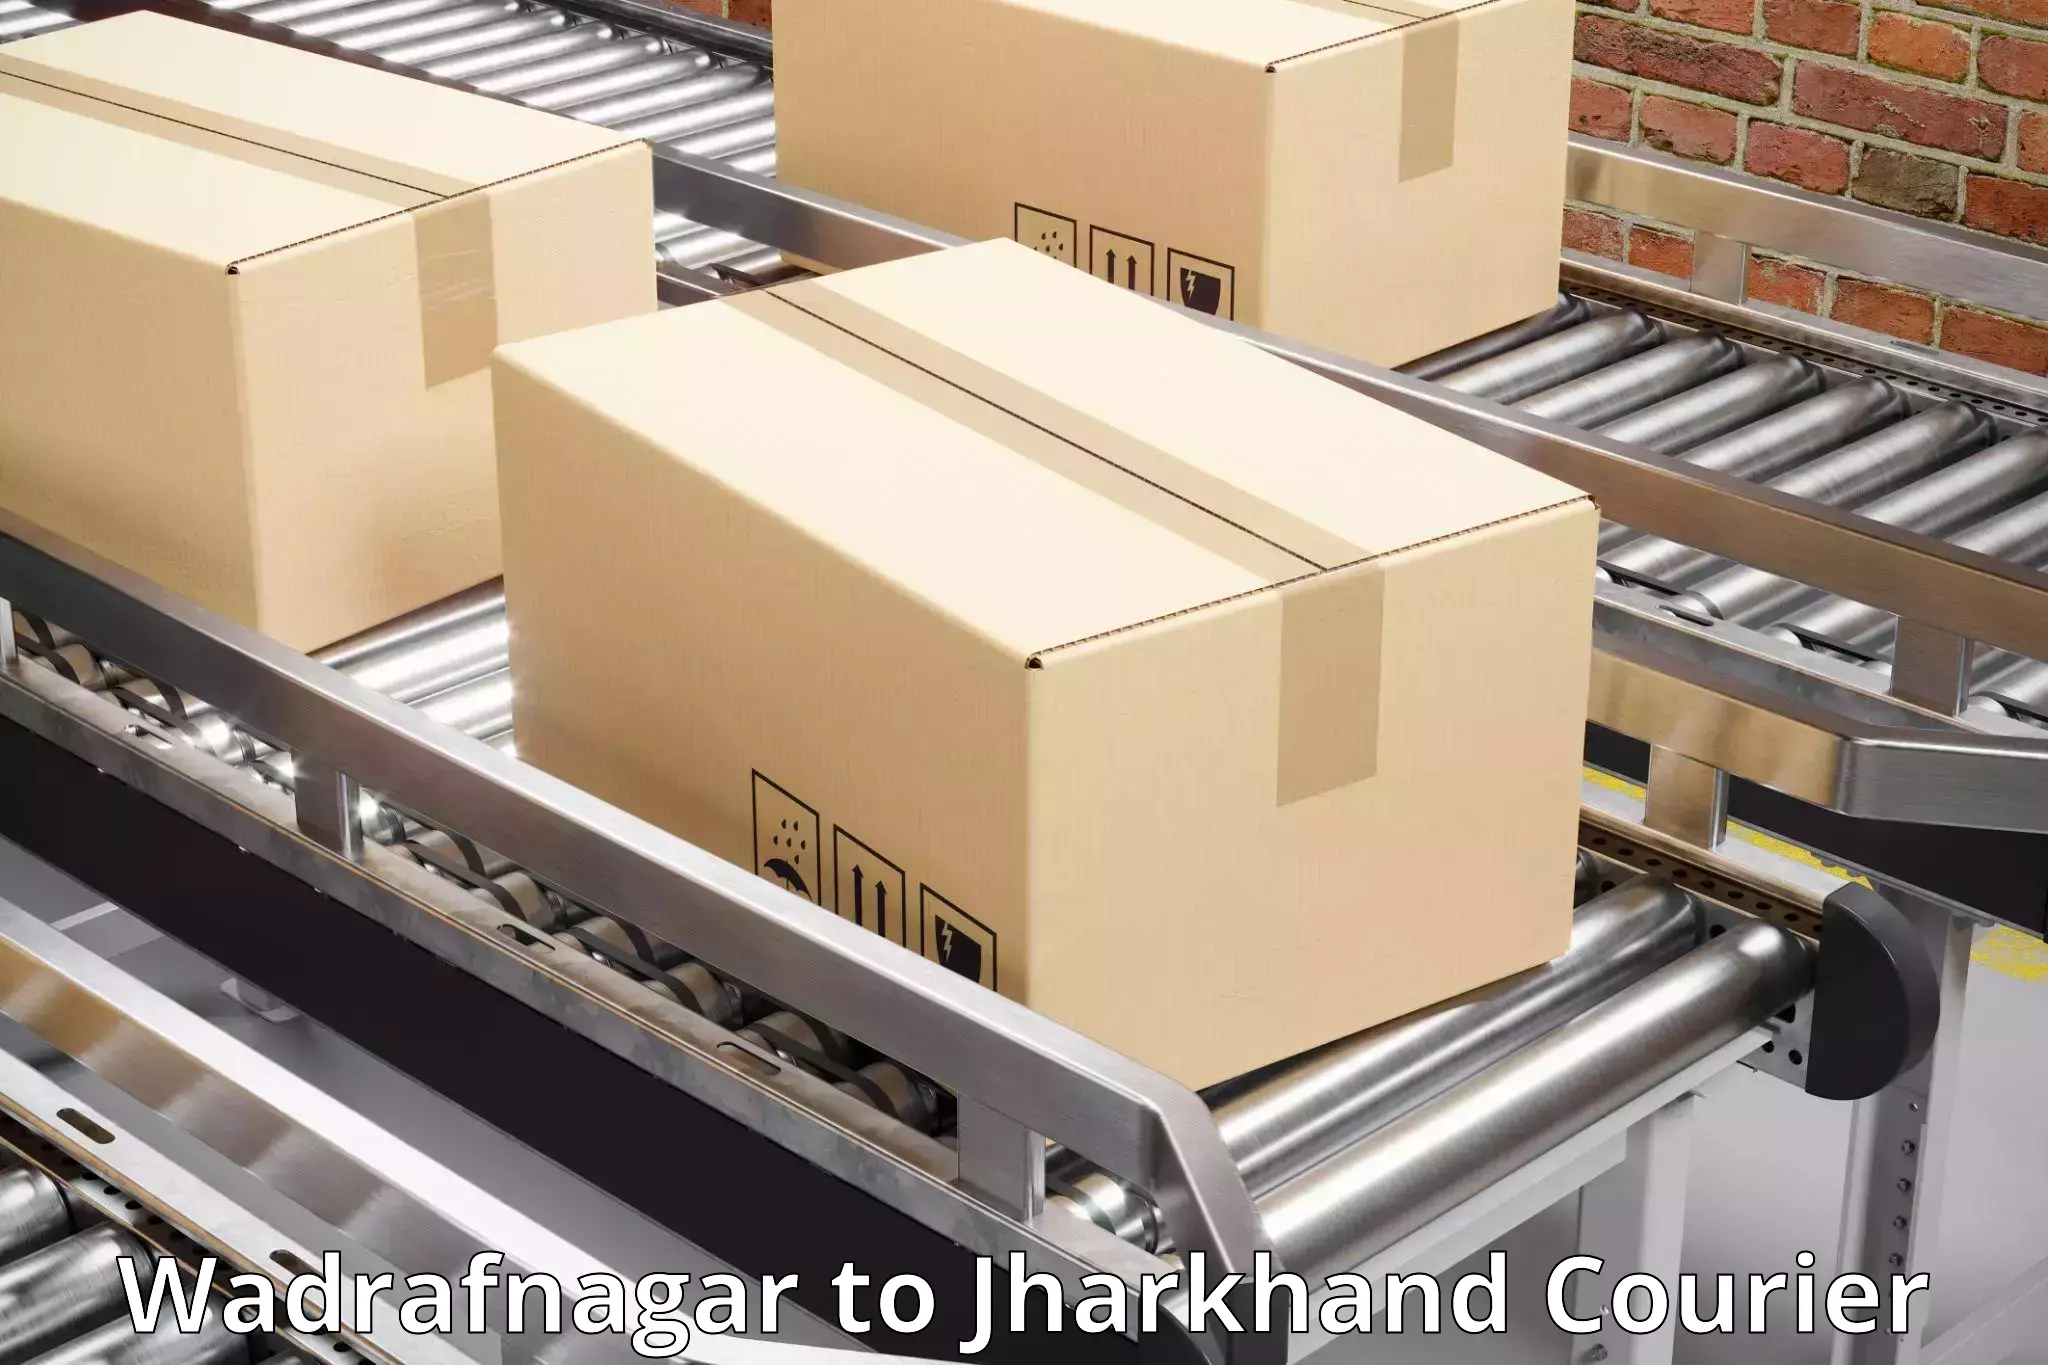 Package delivery network Wadrafnagar to Barharwa